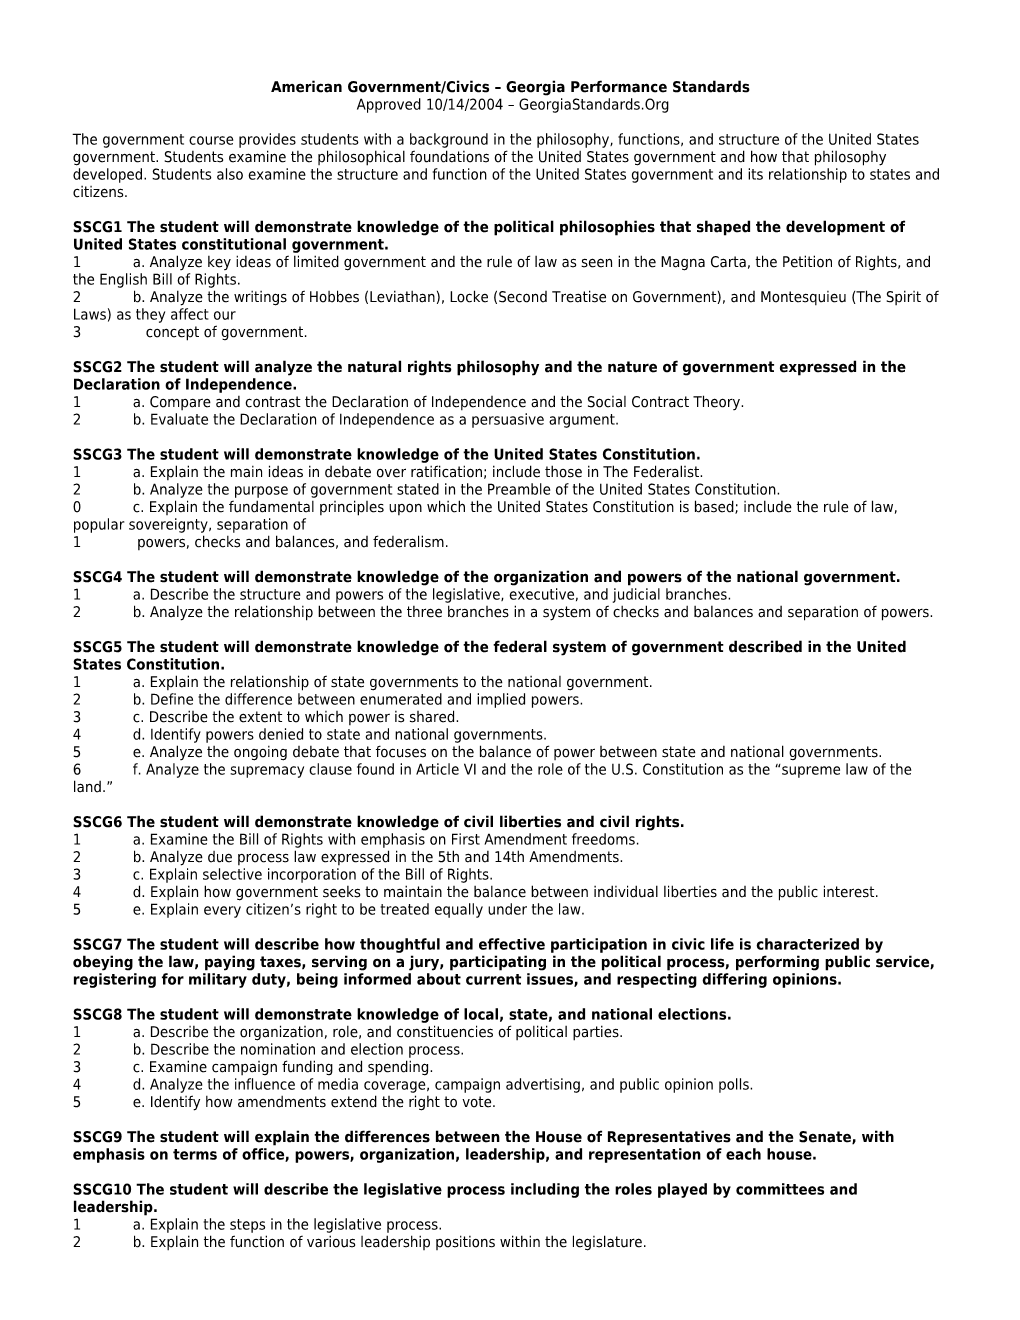 American Government/Civics Approved 10/14/2004 Georgiastandards